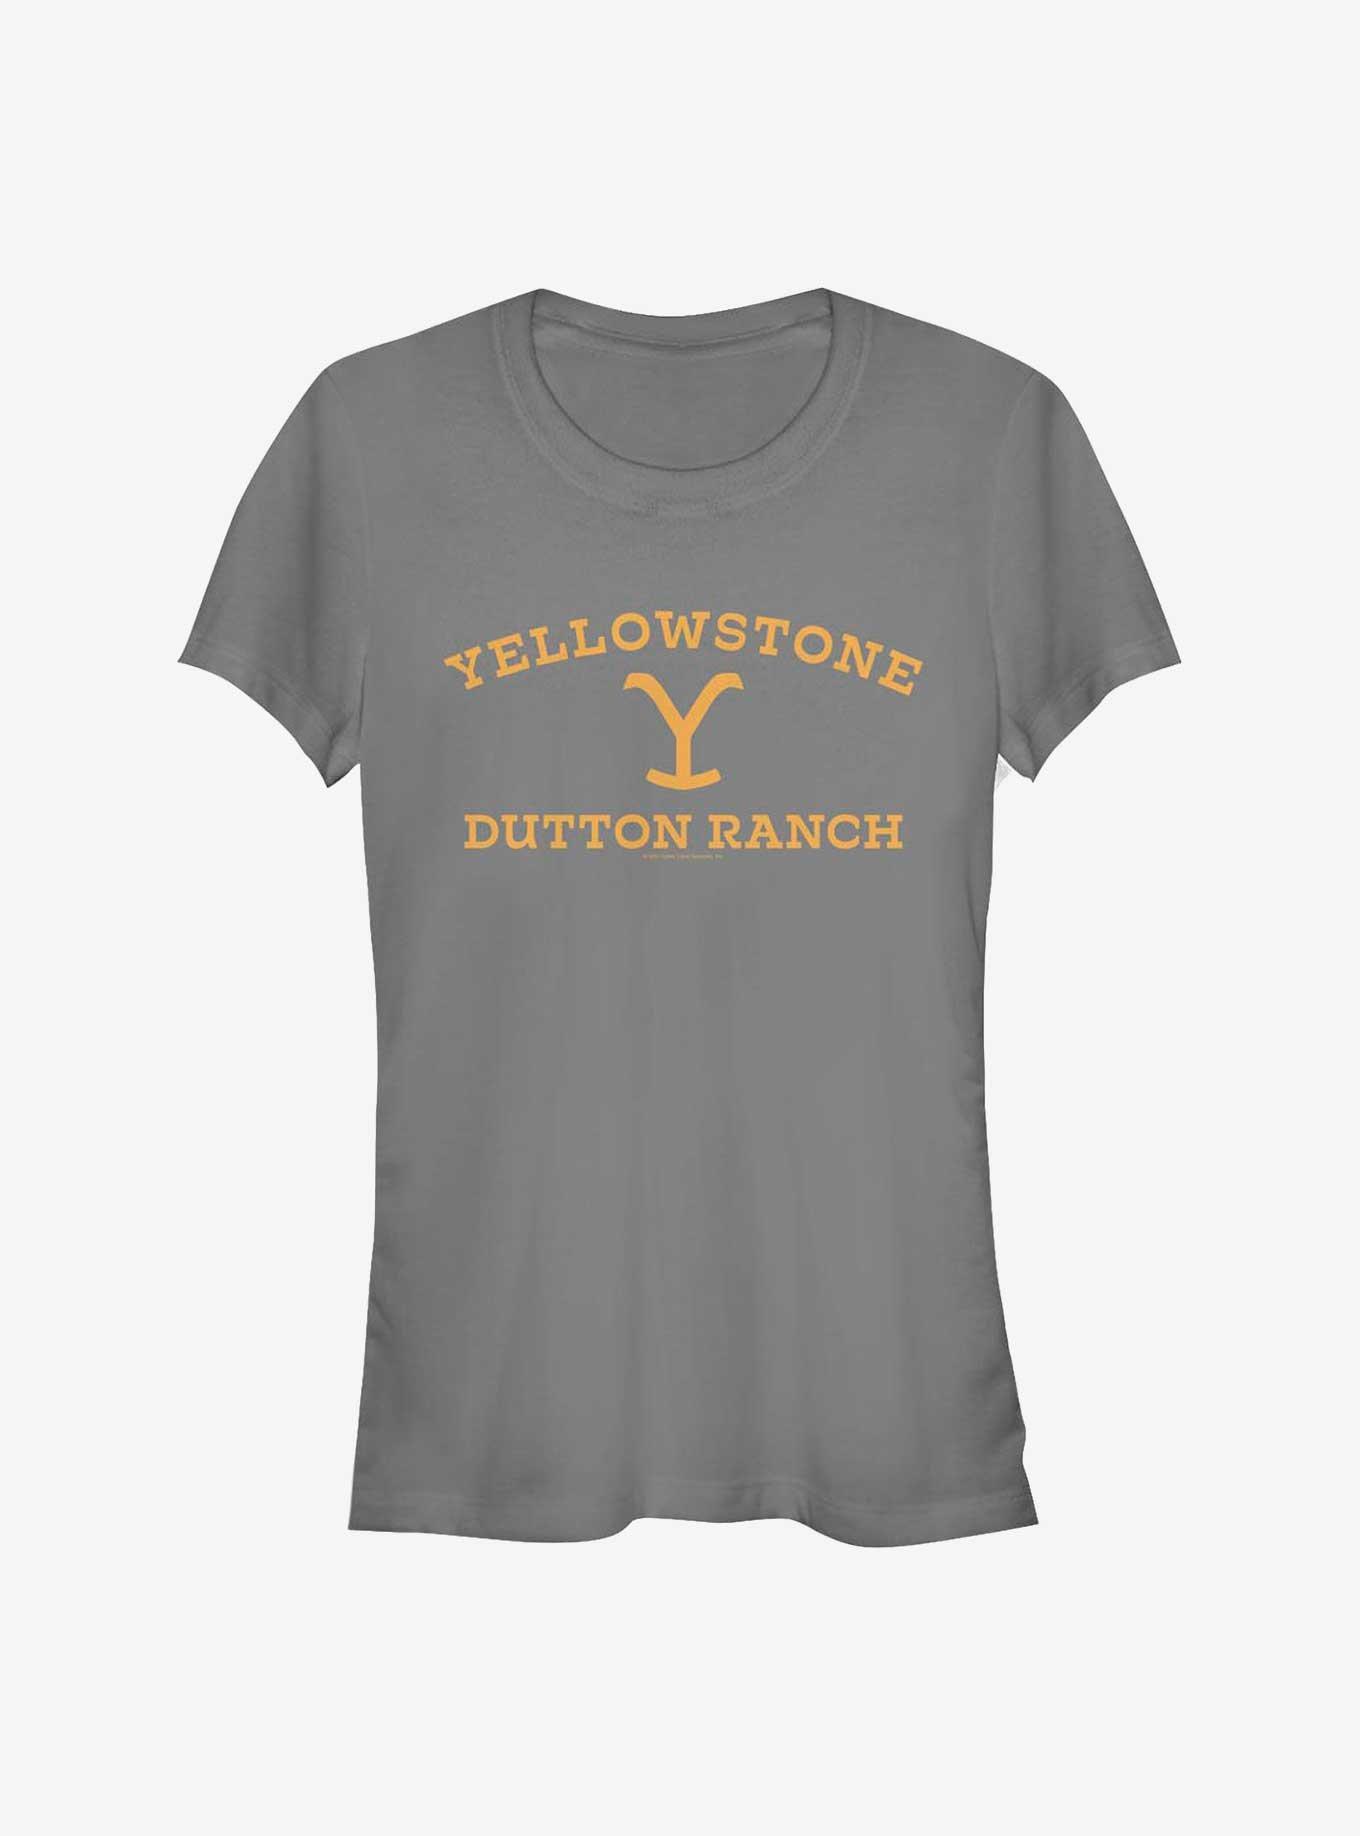 Yellowstone Dutton Ranch Logo Girls T-Shirt, CHARCOAL, hi-res